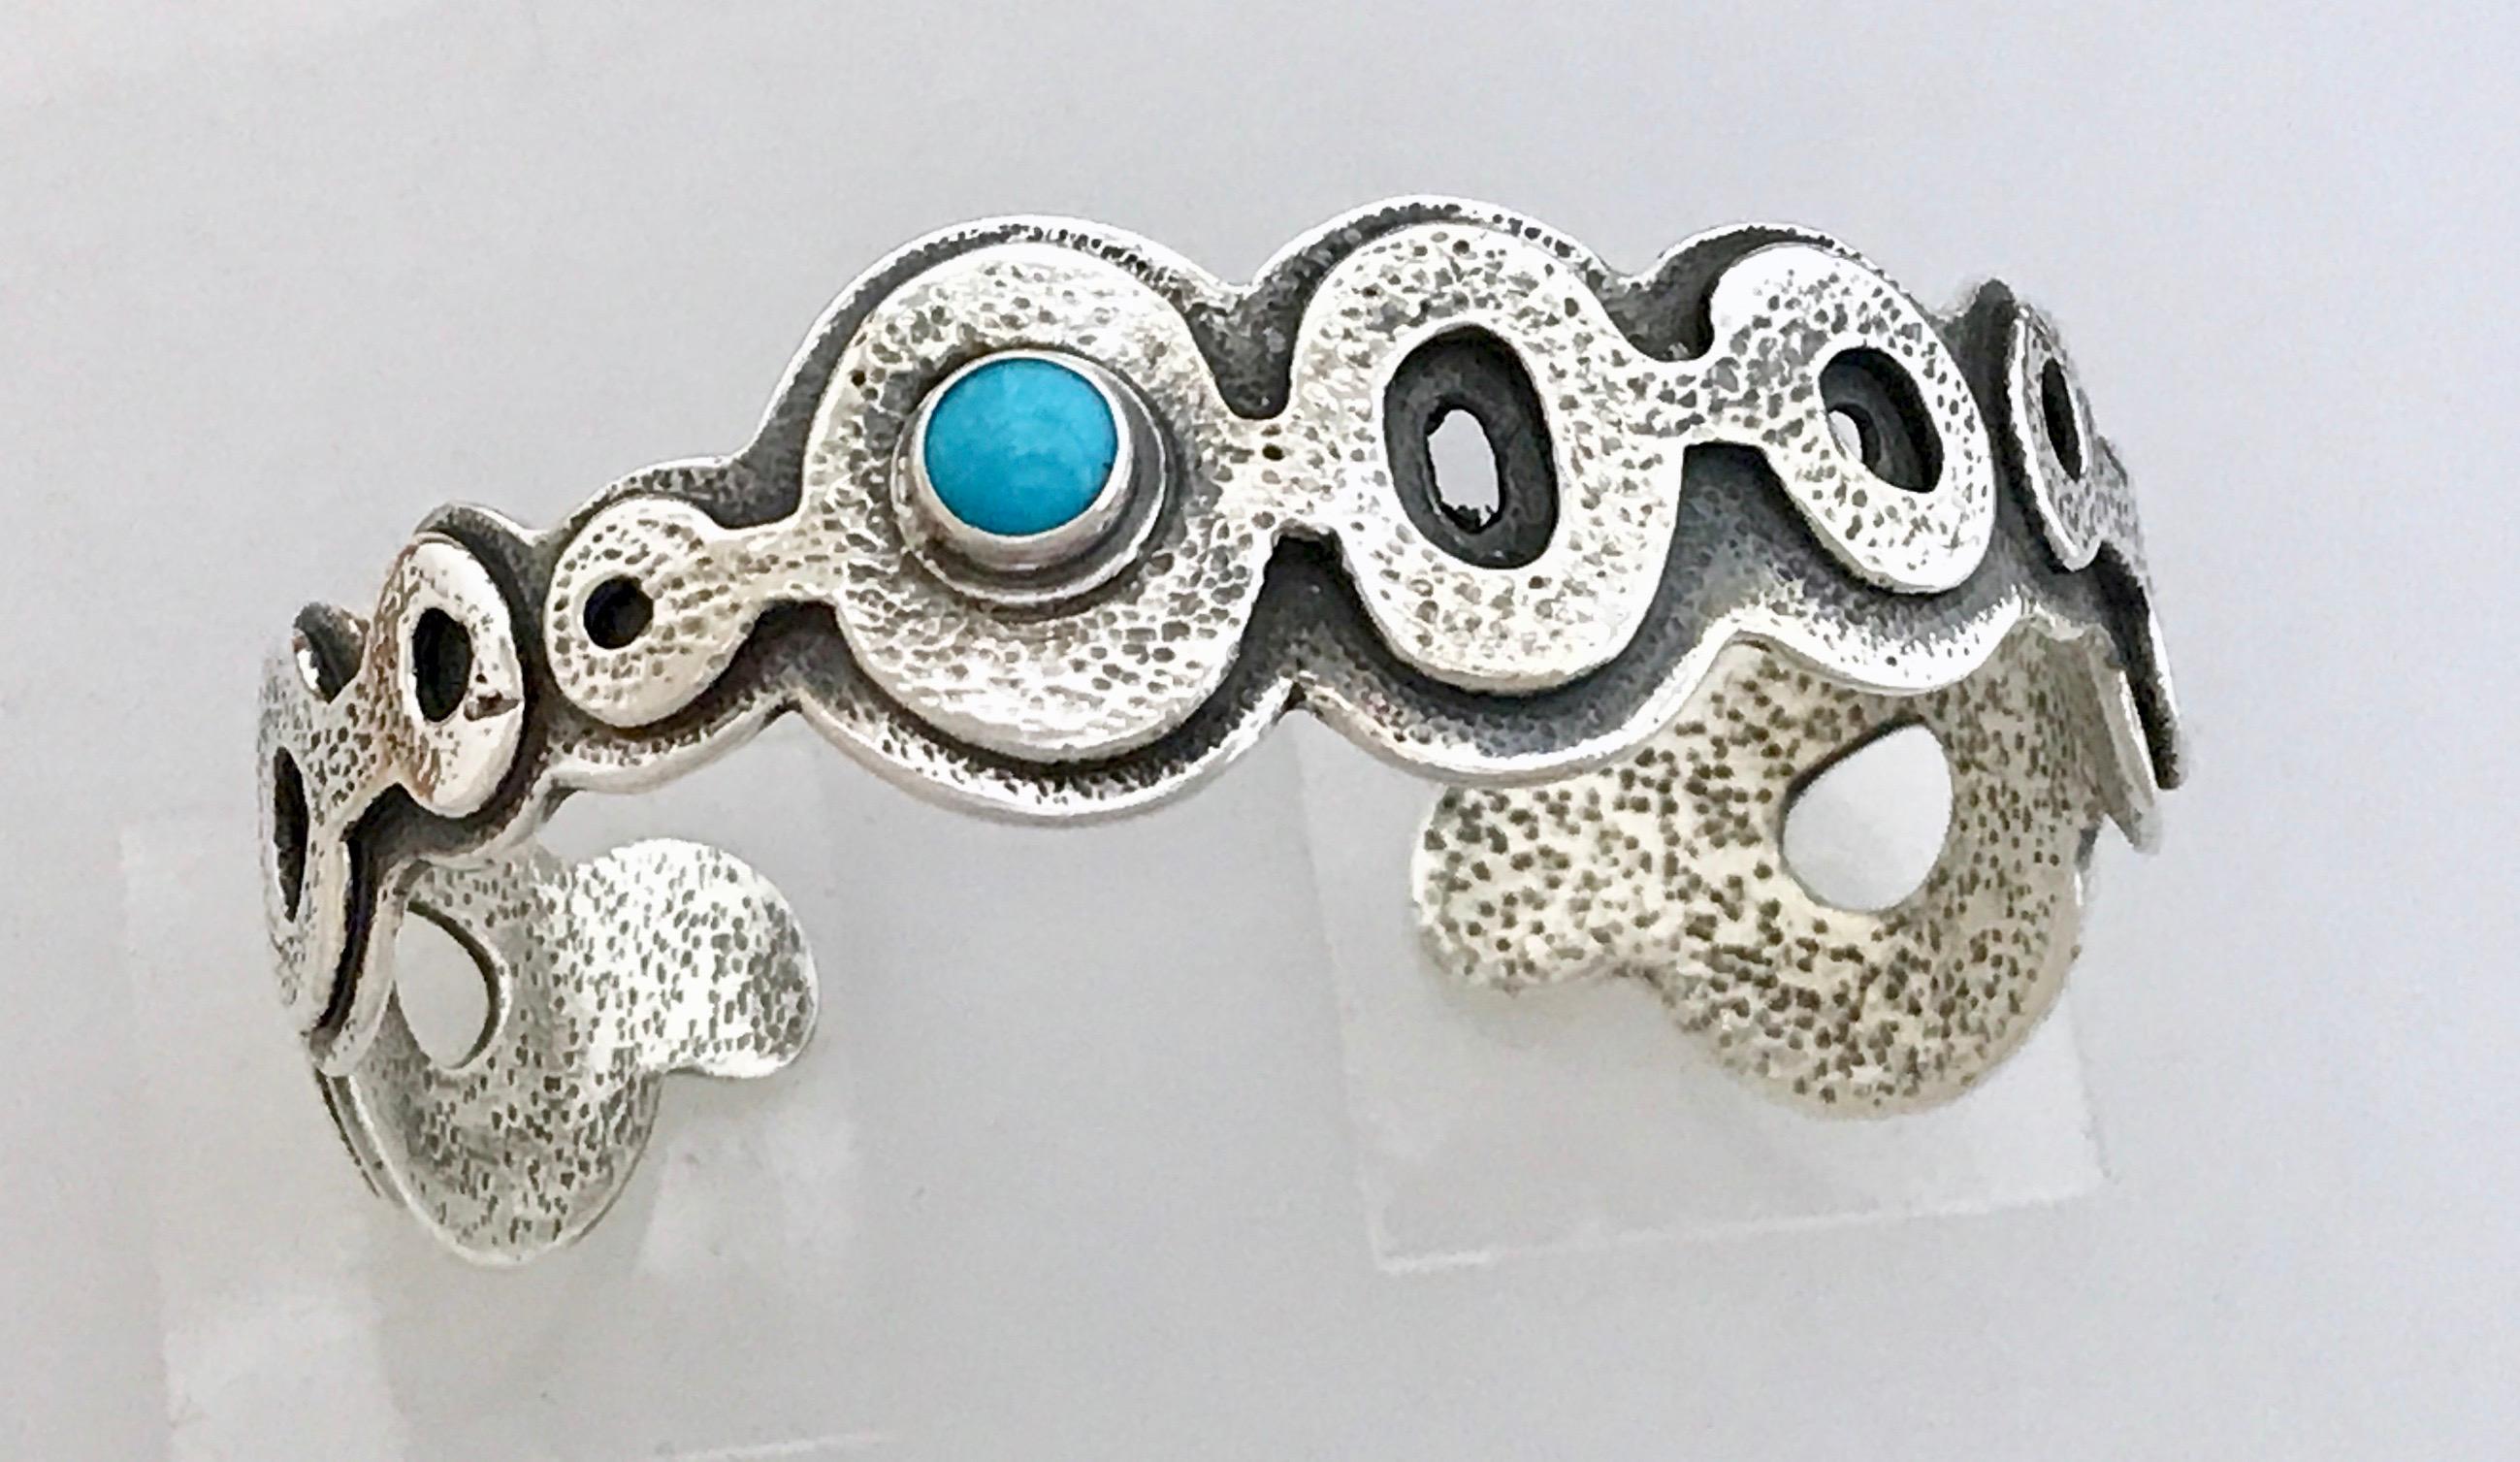 Spirit Pond bracelet, by Melanie Yazzie, Sleeping Beauty Turquoise, cast, silver
Cast sterling silver bracelet with Sleeping Beauty cabochon. 5.5